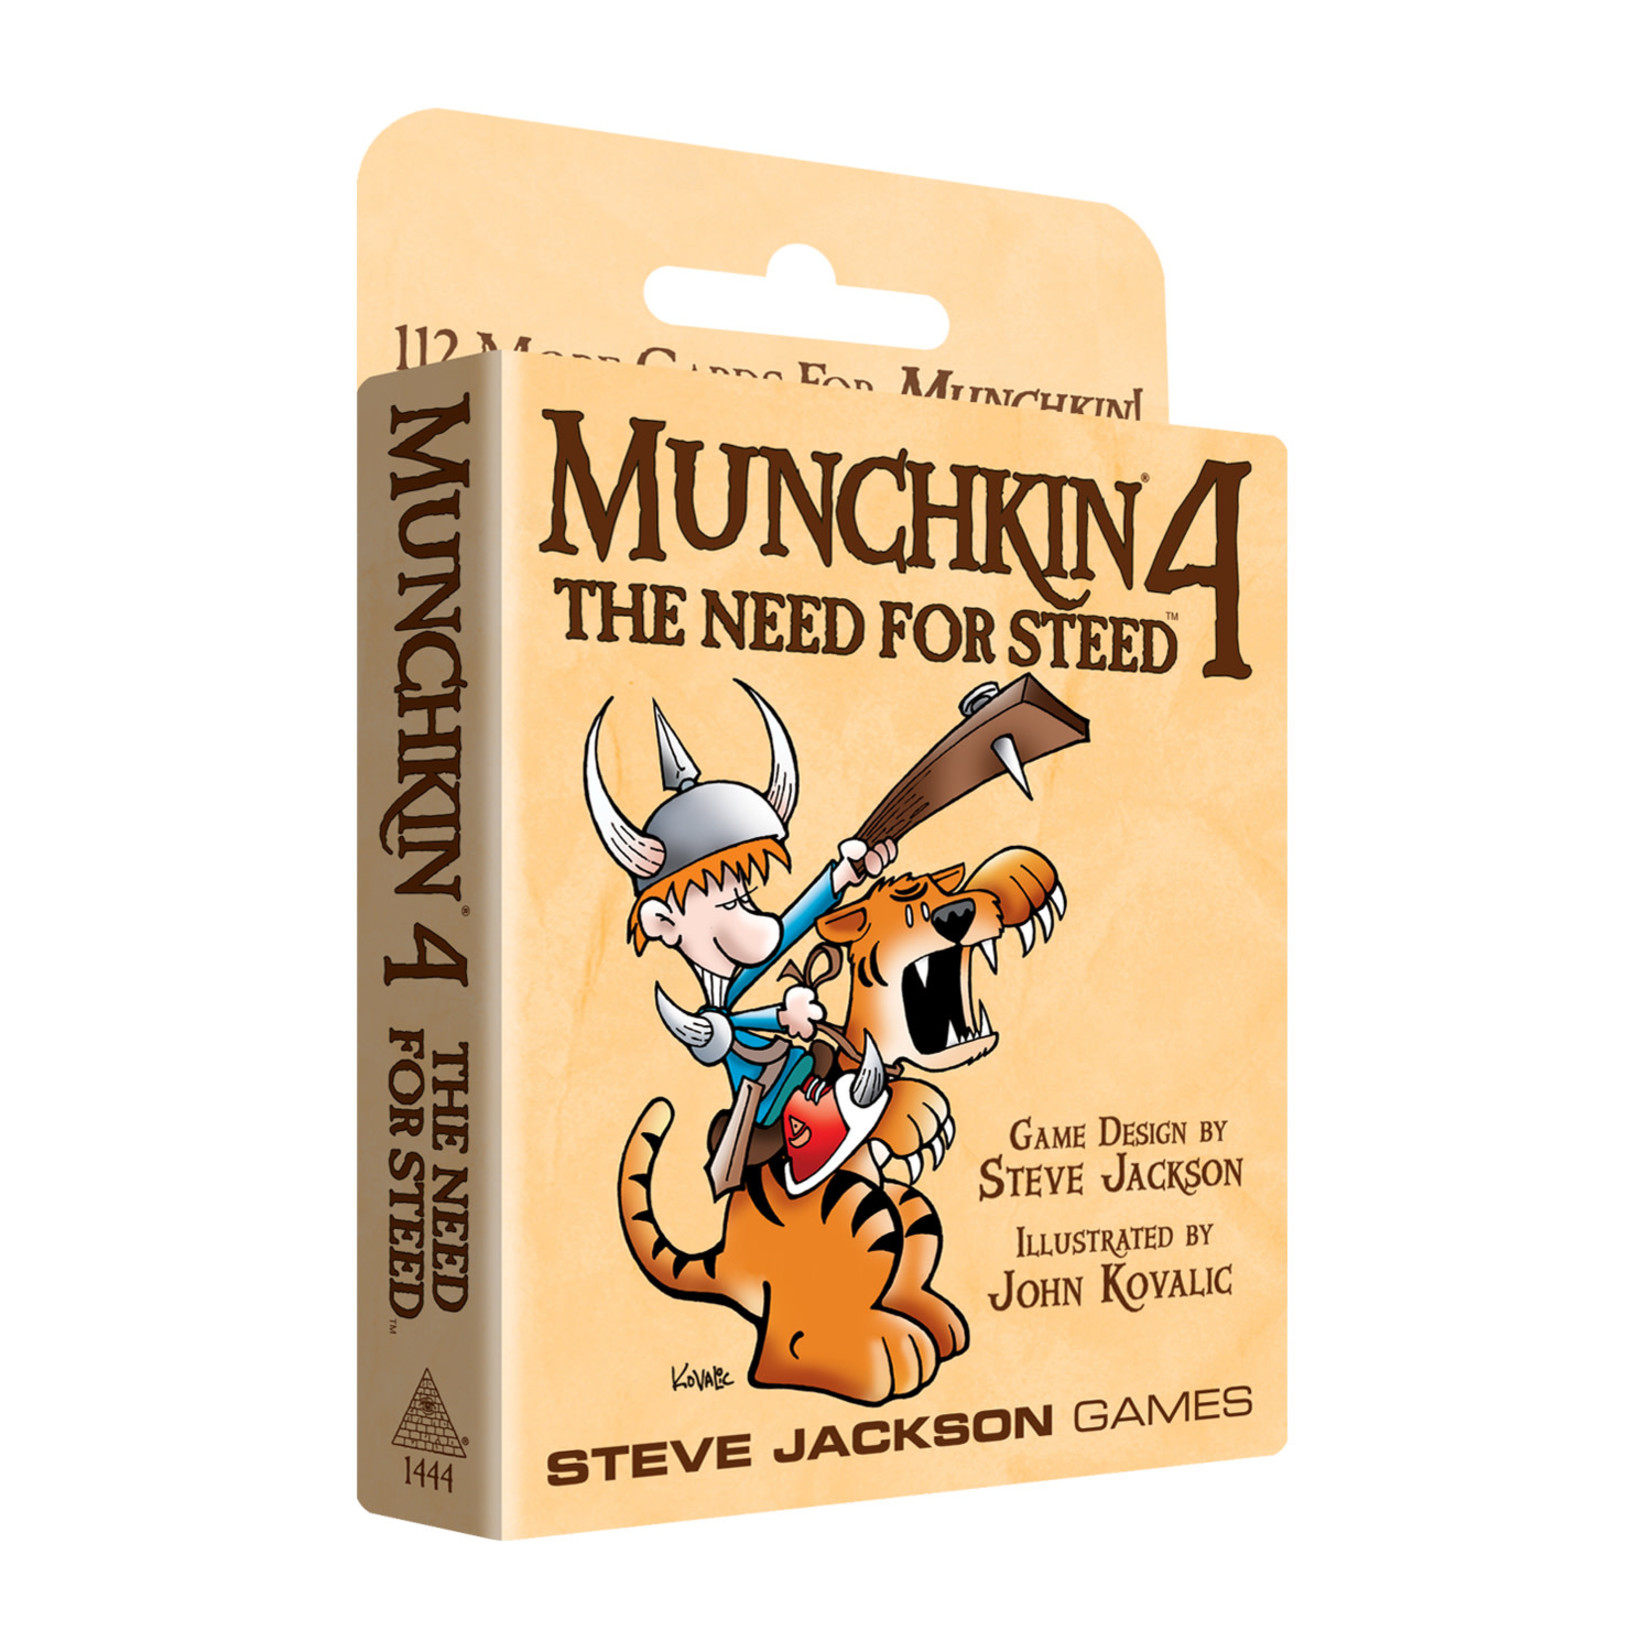 Steve Jackson Games Munchkin: Munchkin 4 - The Need for Steed